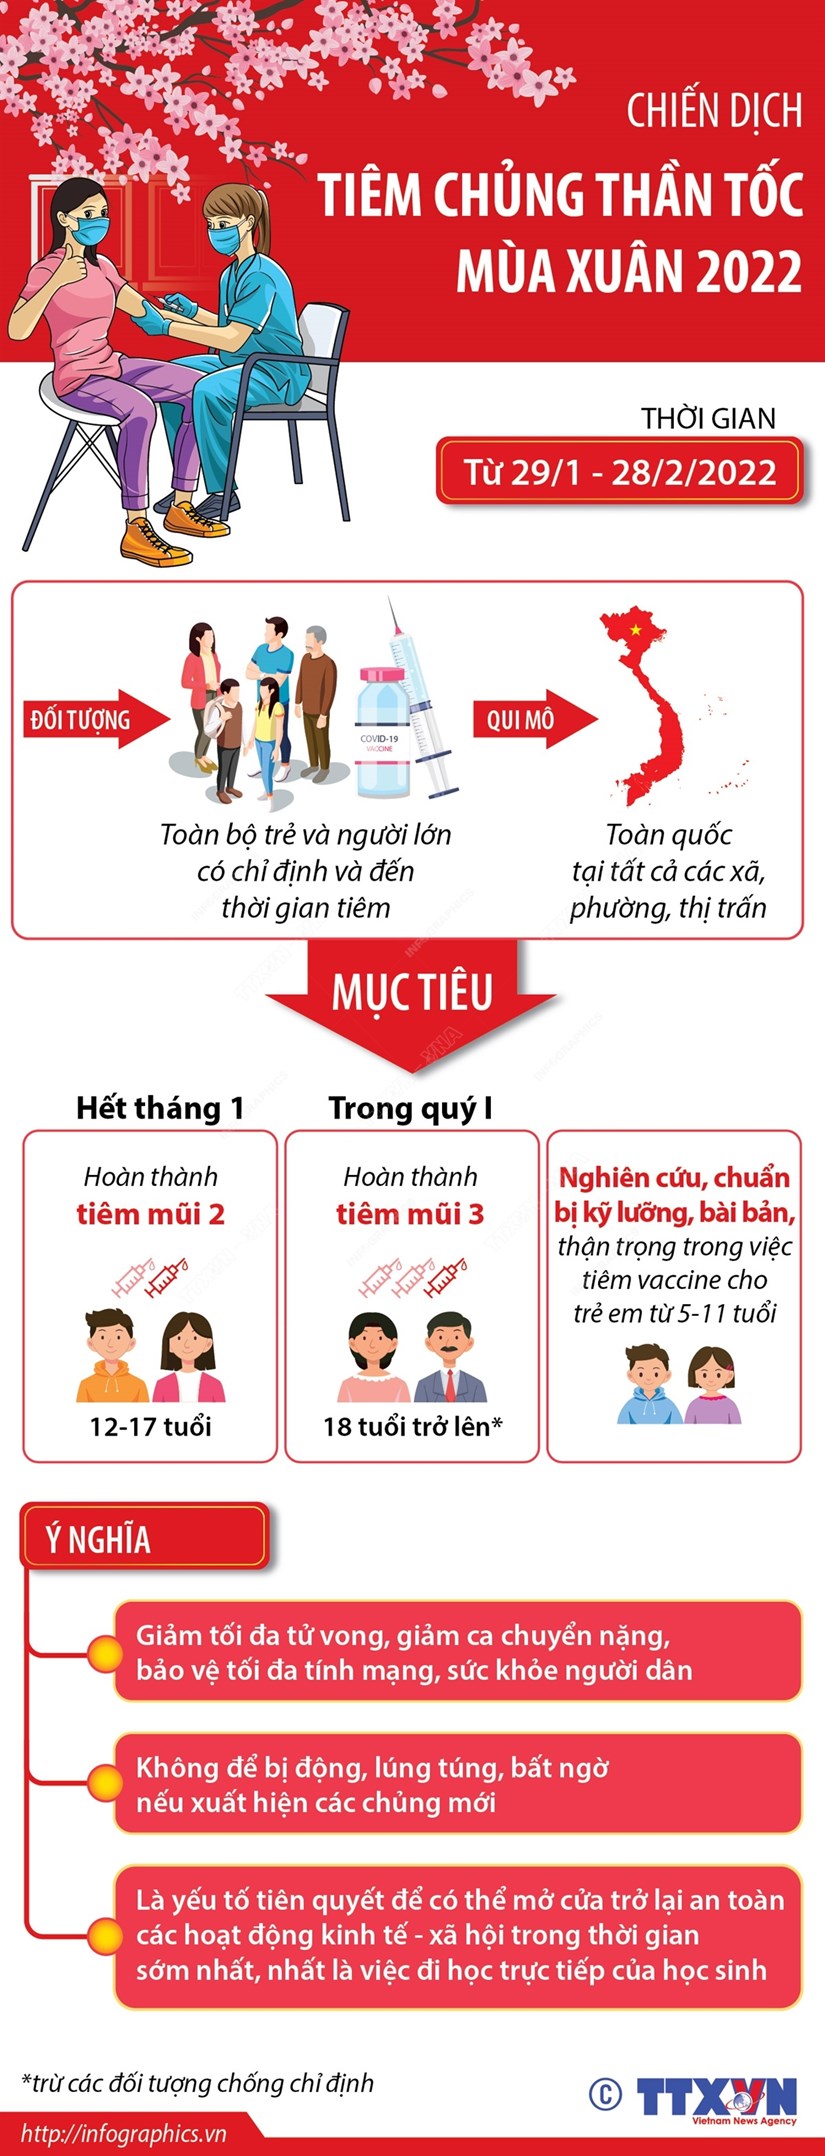 [Infographics] Chien dich tiem chung than toc mua Xuan 2022 hinh anh 1